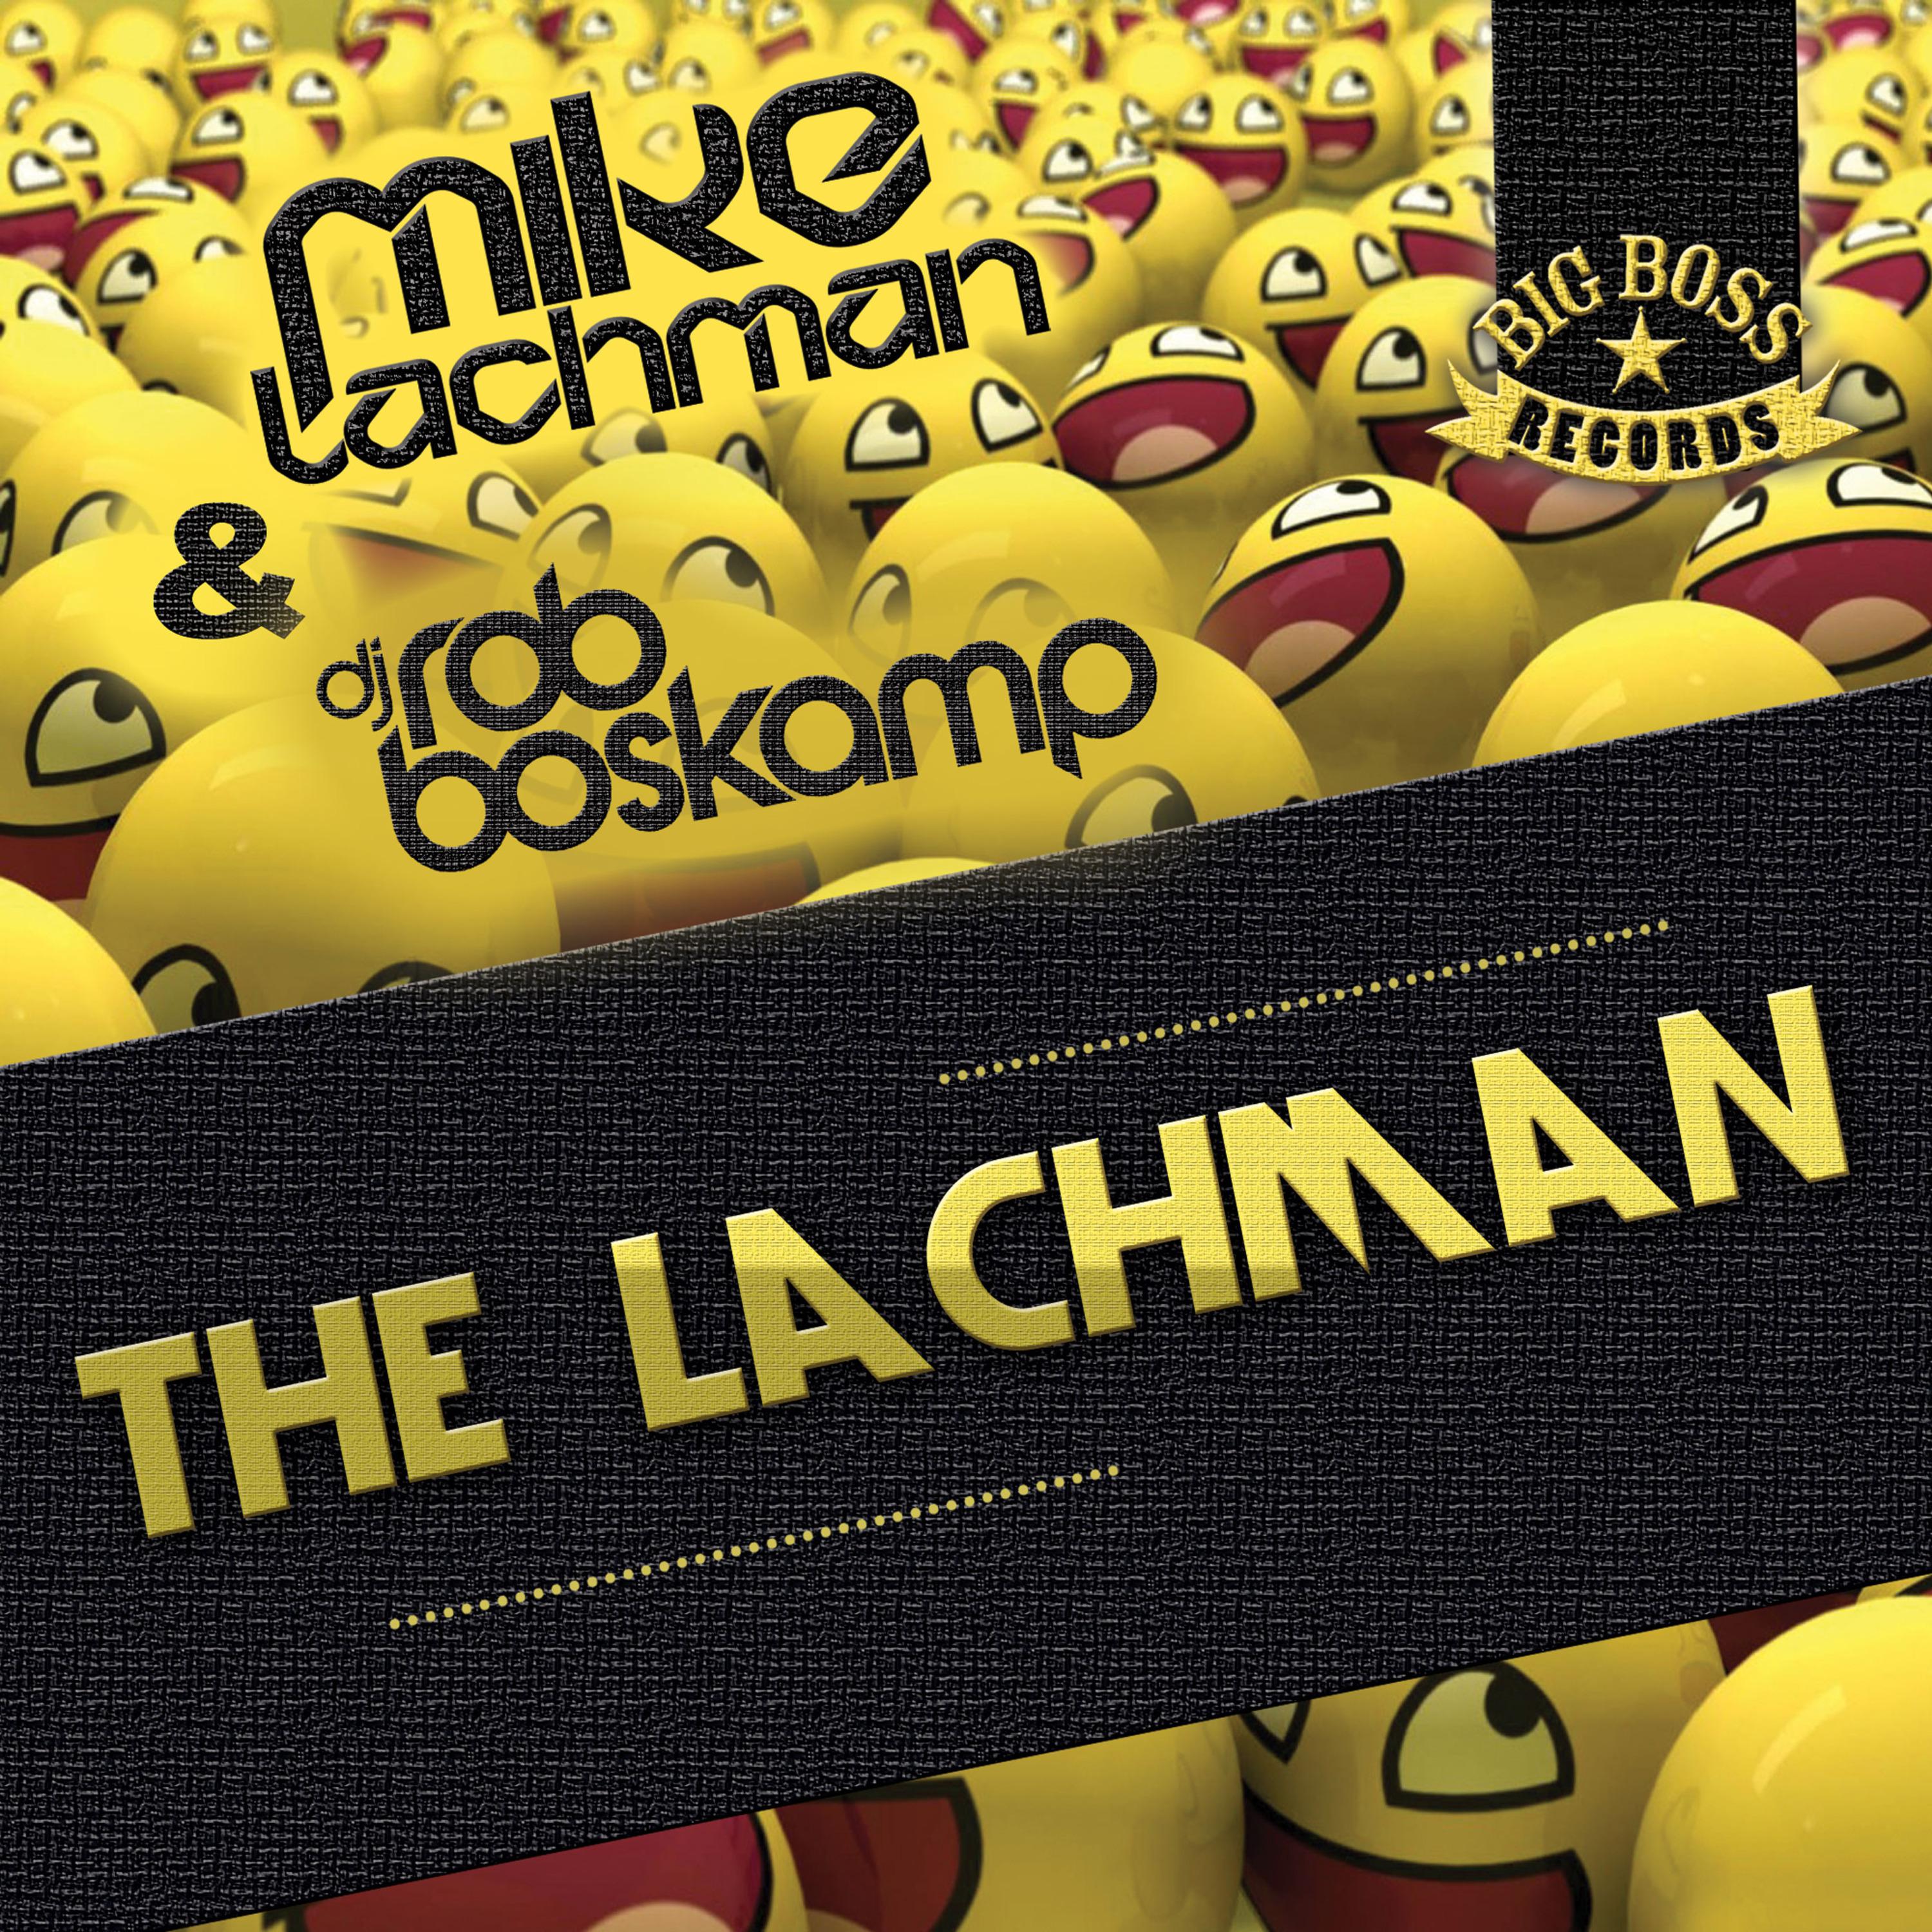 The Lachman